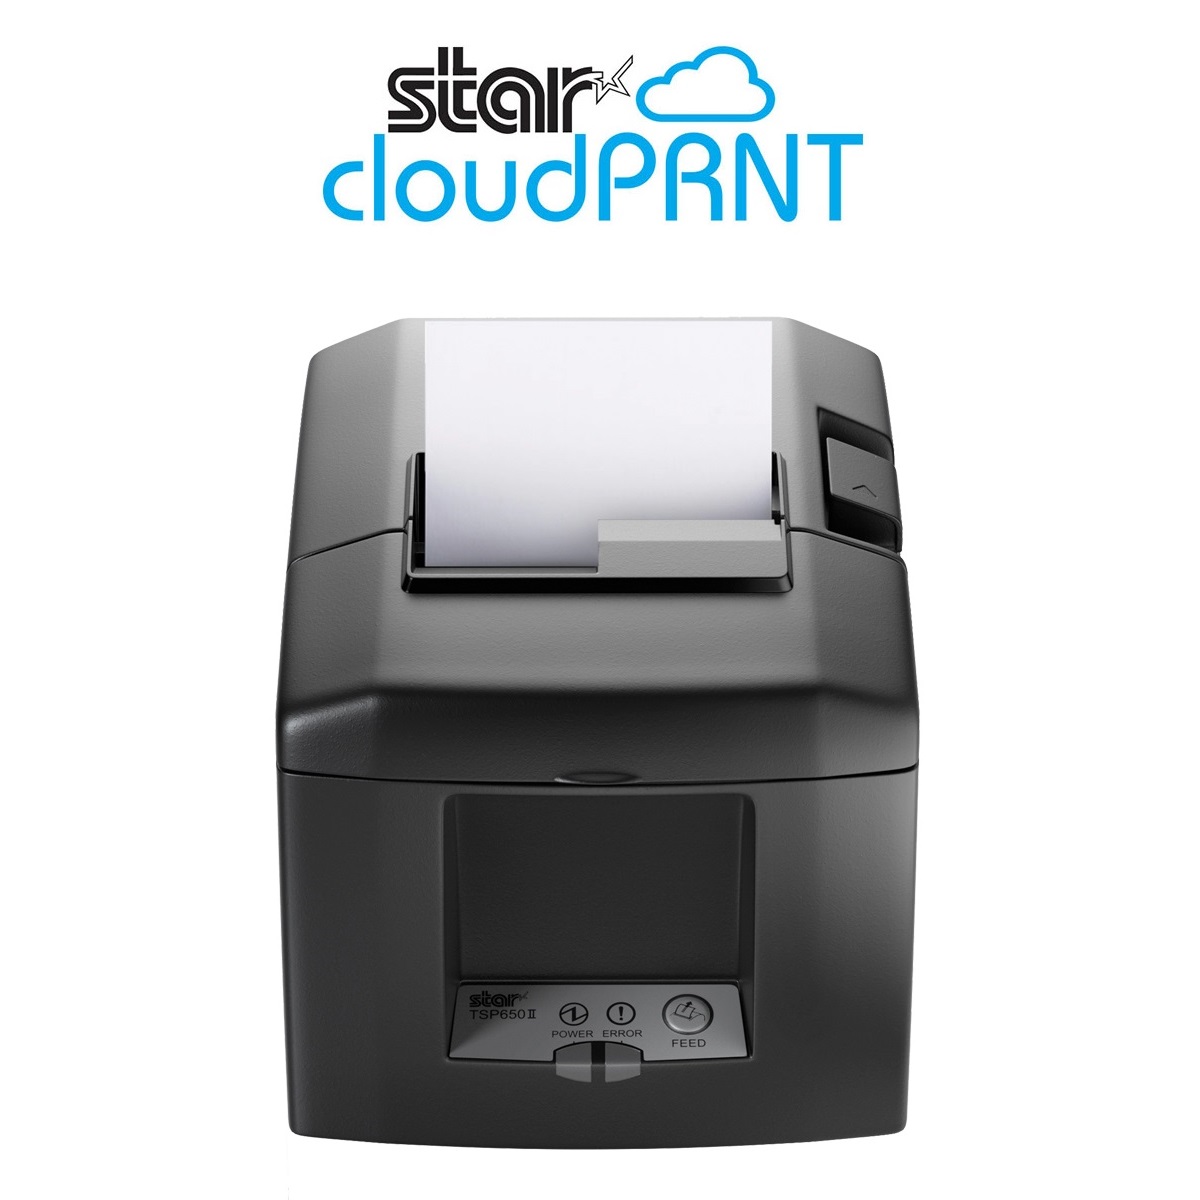 View Star TSP654IISK CloudPRNT Sticky Label Printer